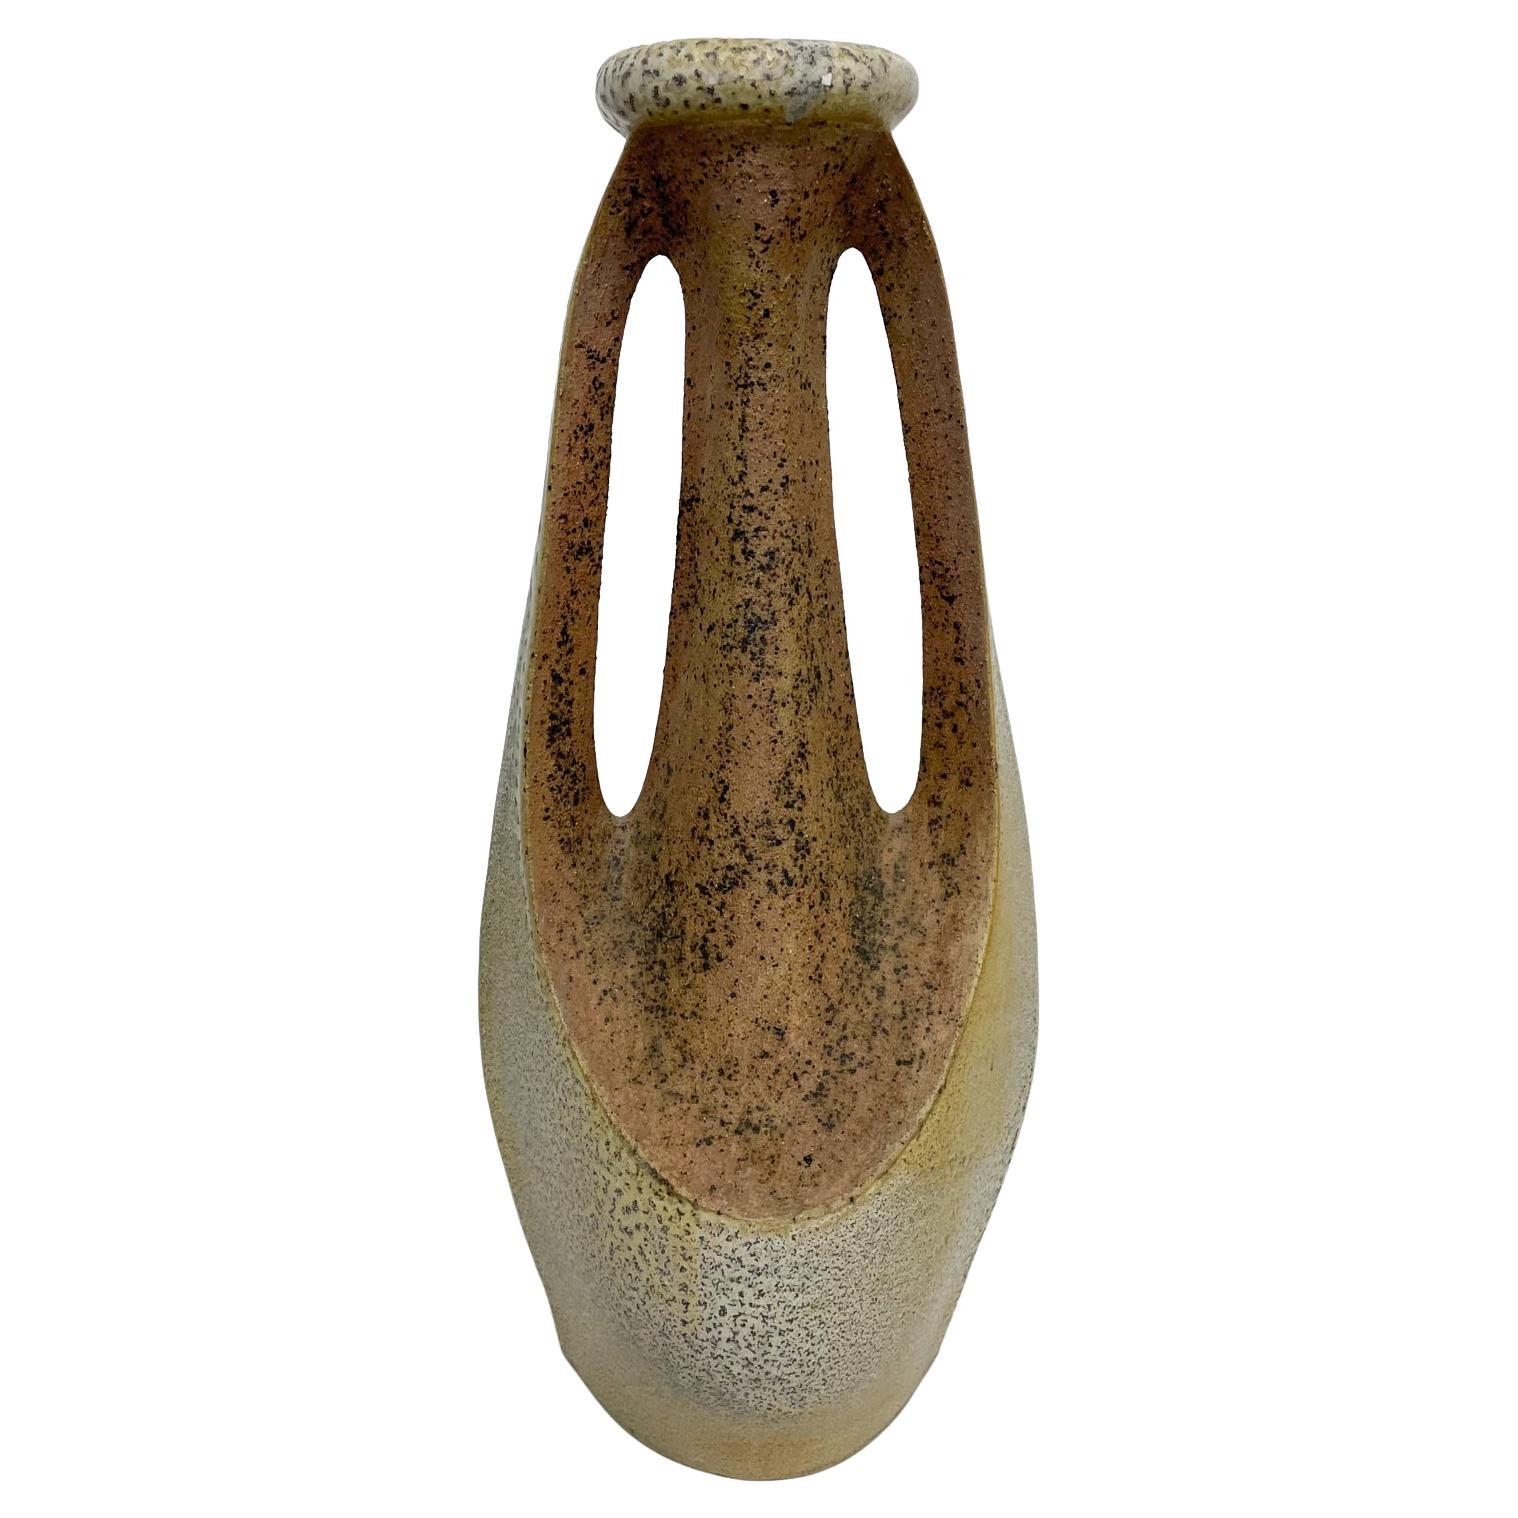 Speckled Pottery Sculptural Modernist Vase by Chico Ribeiro Munoz Brazil